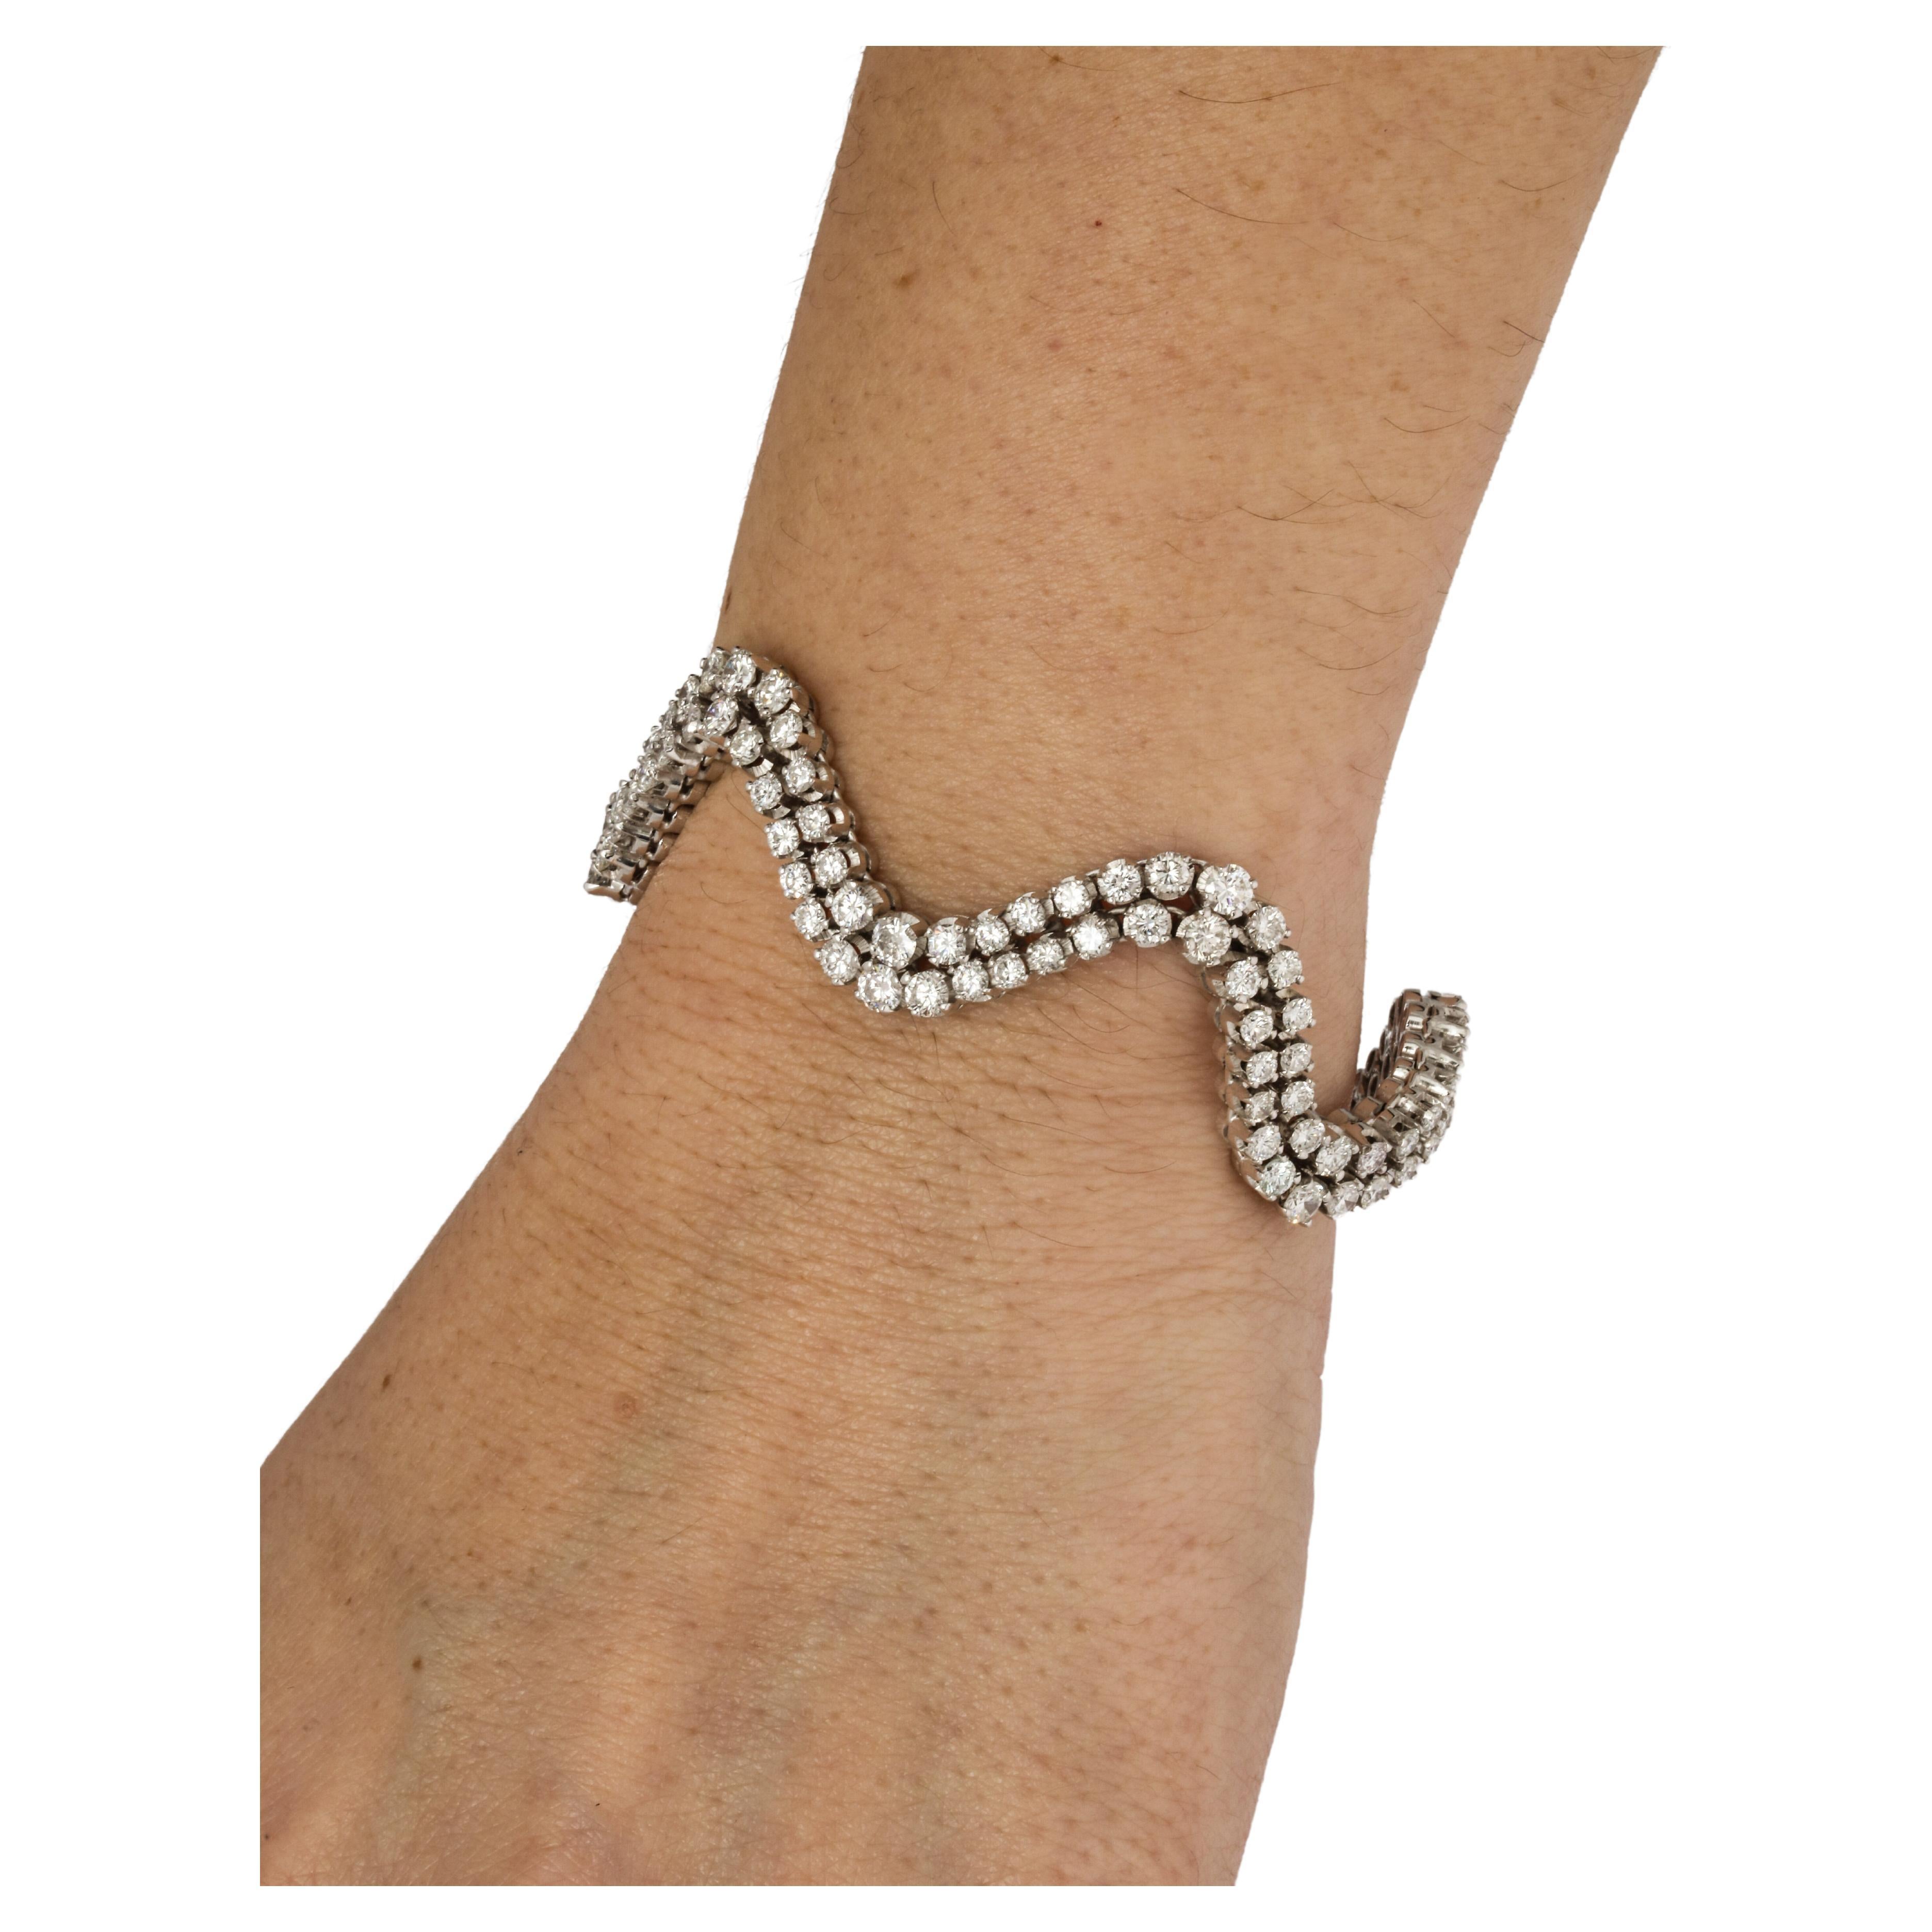 Fine Diamond Bracelet With Flexible Undulating Design